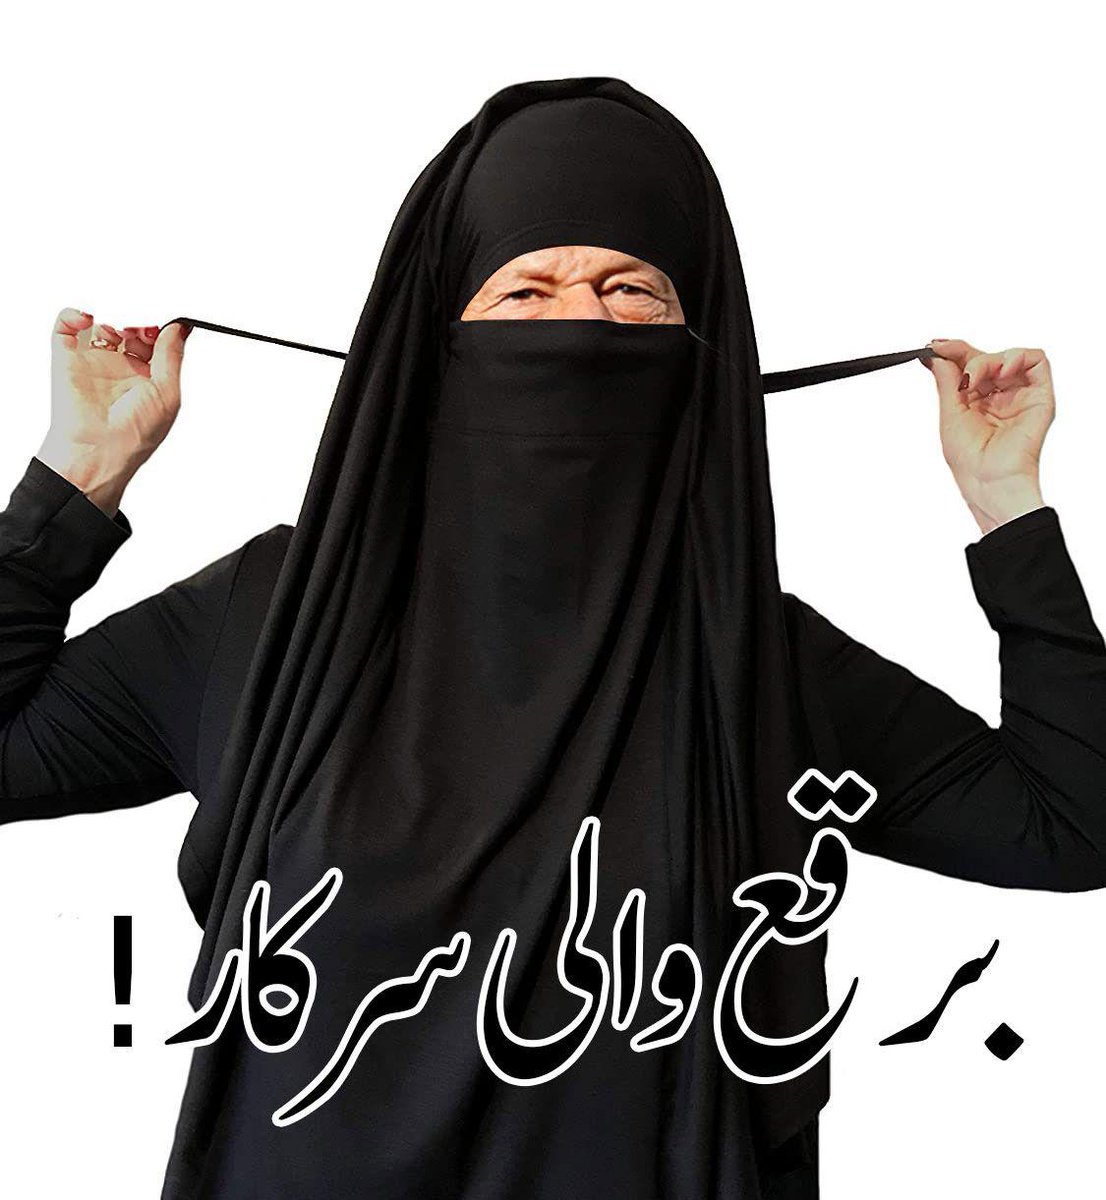 برقعہ پوش فتنے کو گرفتار کرو
@MaryamNSharif
@Shamylaroy #YMT
#گیدڑ_خان_حاضر_ہو